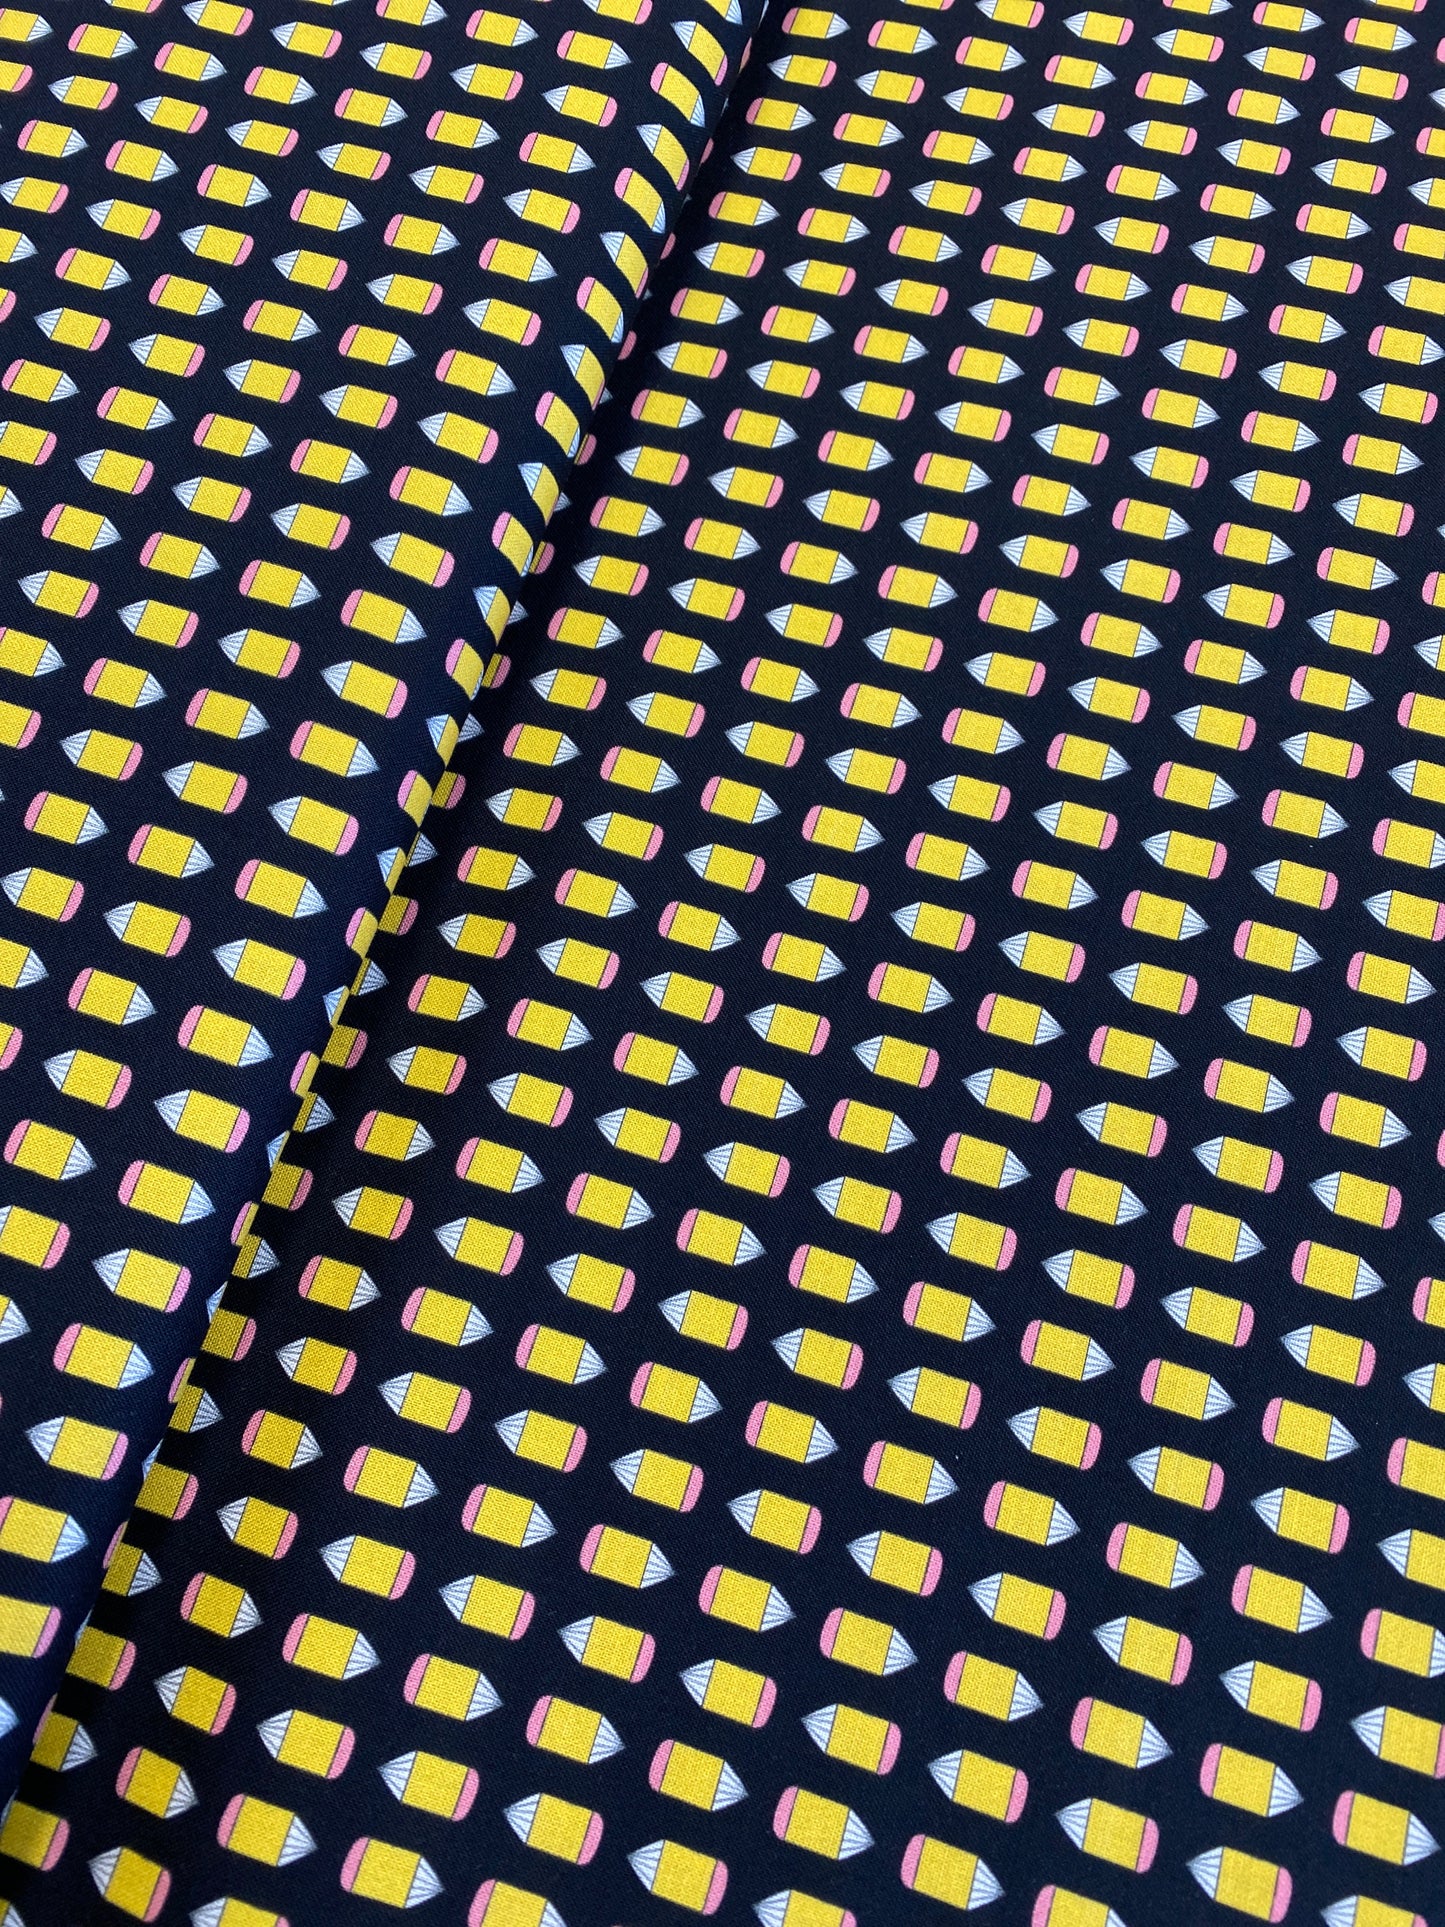 Suzy's Minis by Suzy Ultman Mini Pencils on Black 17213-black Cotton Woven Fabric